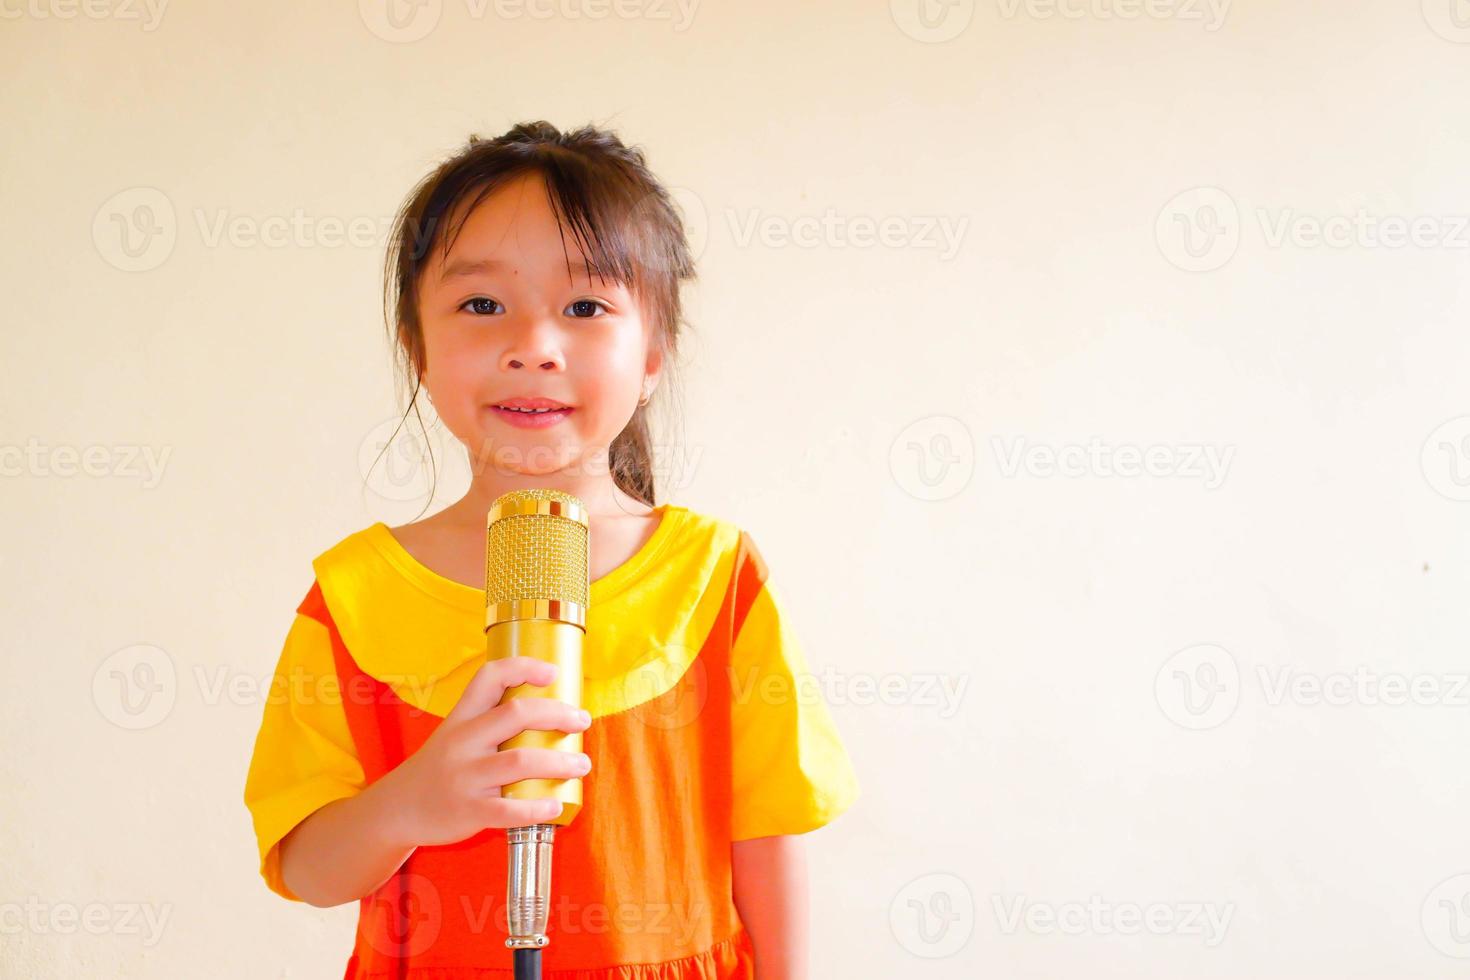 linda menina usa roupa amarelo-laranja gokowa ou mugunghwa, e segura música de canto de microfone de ouro. meninas e vestido de moda adolescente. foto